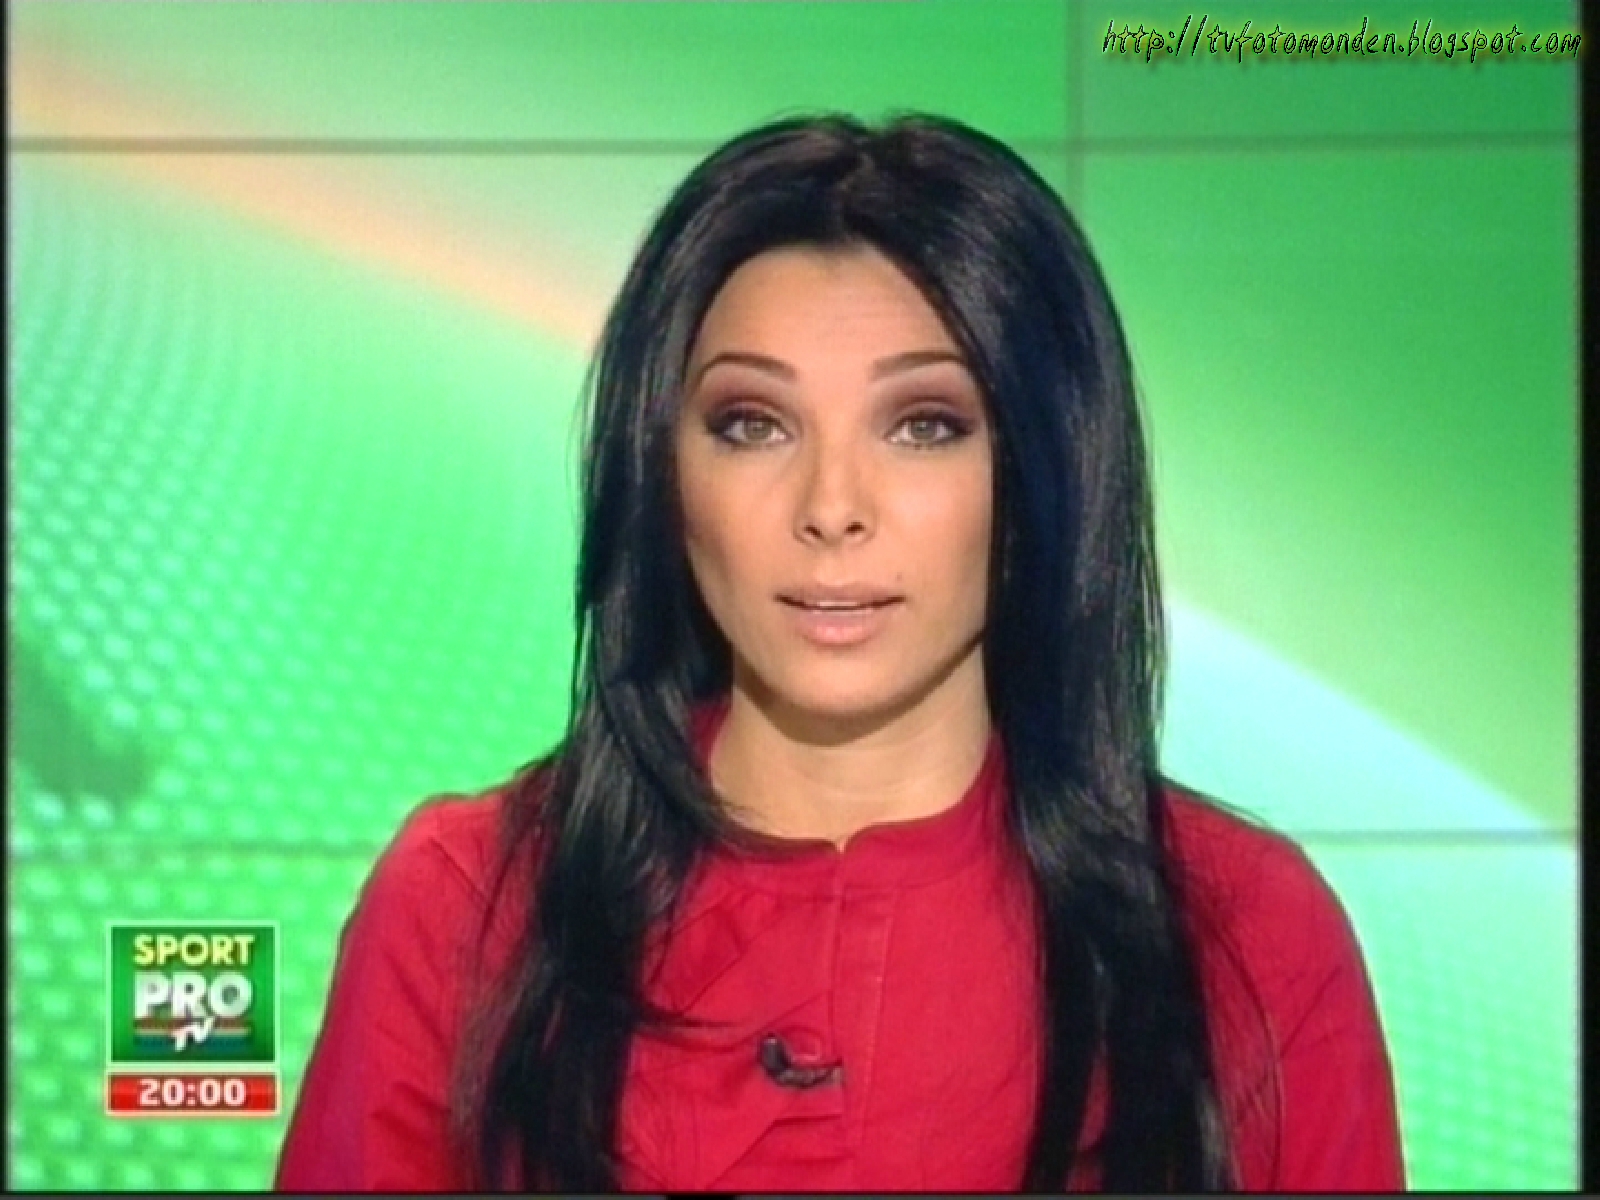 tv foto monden: Corina Caragea prezinta stirile din sport la Pro TV